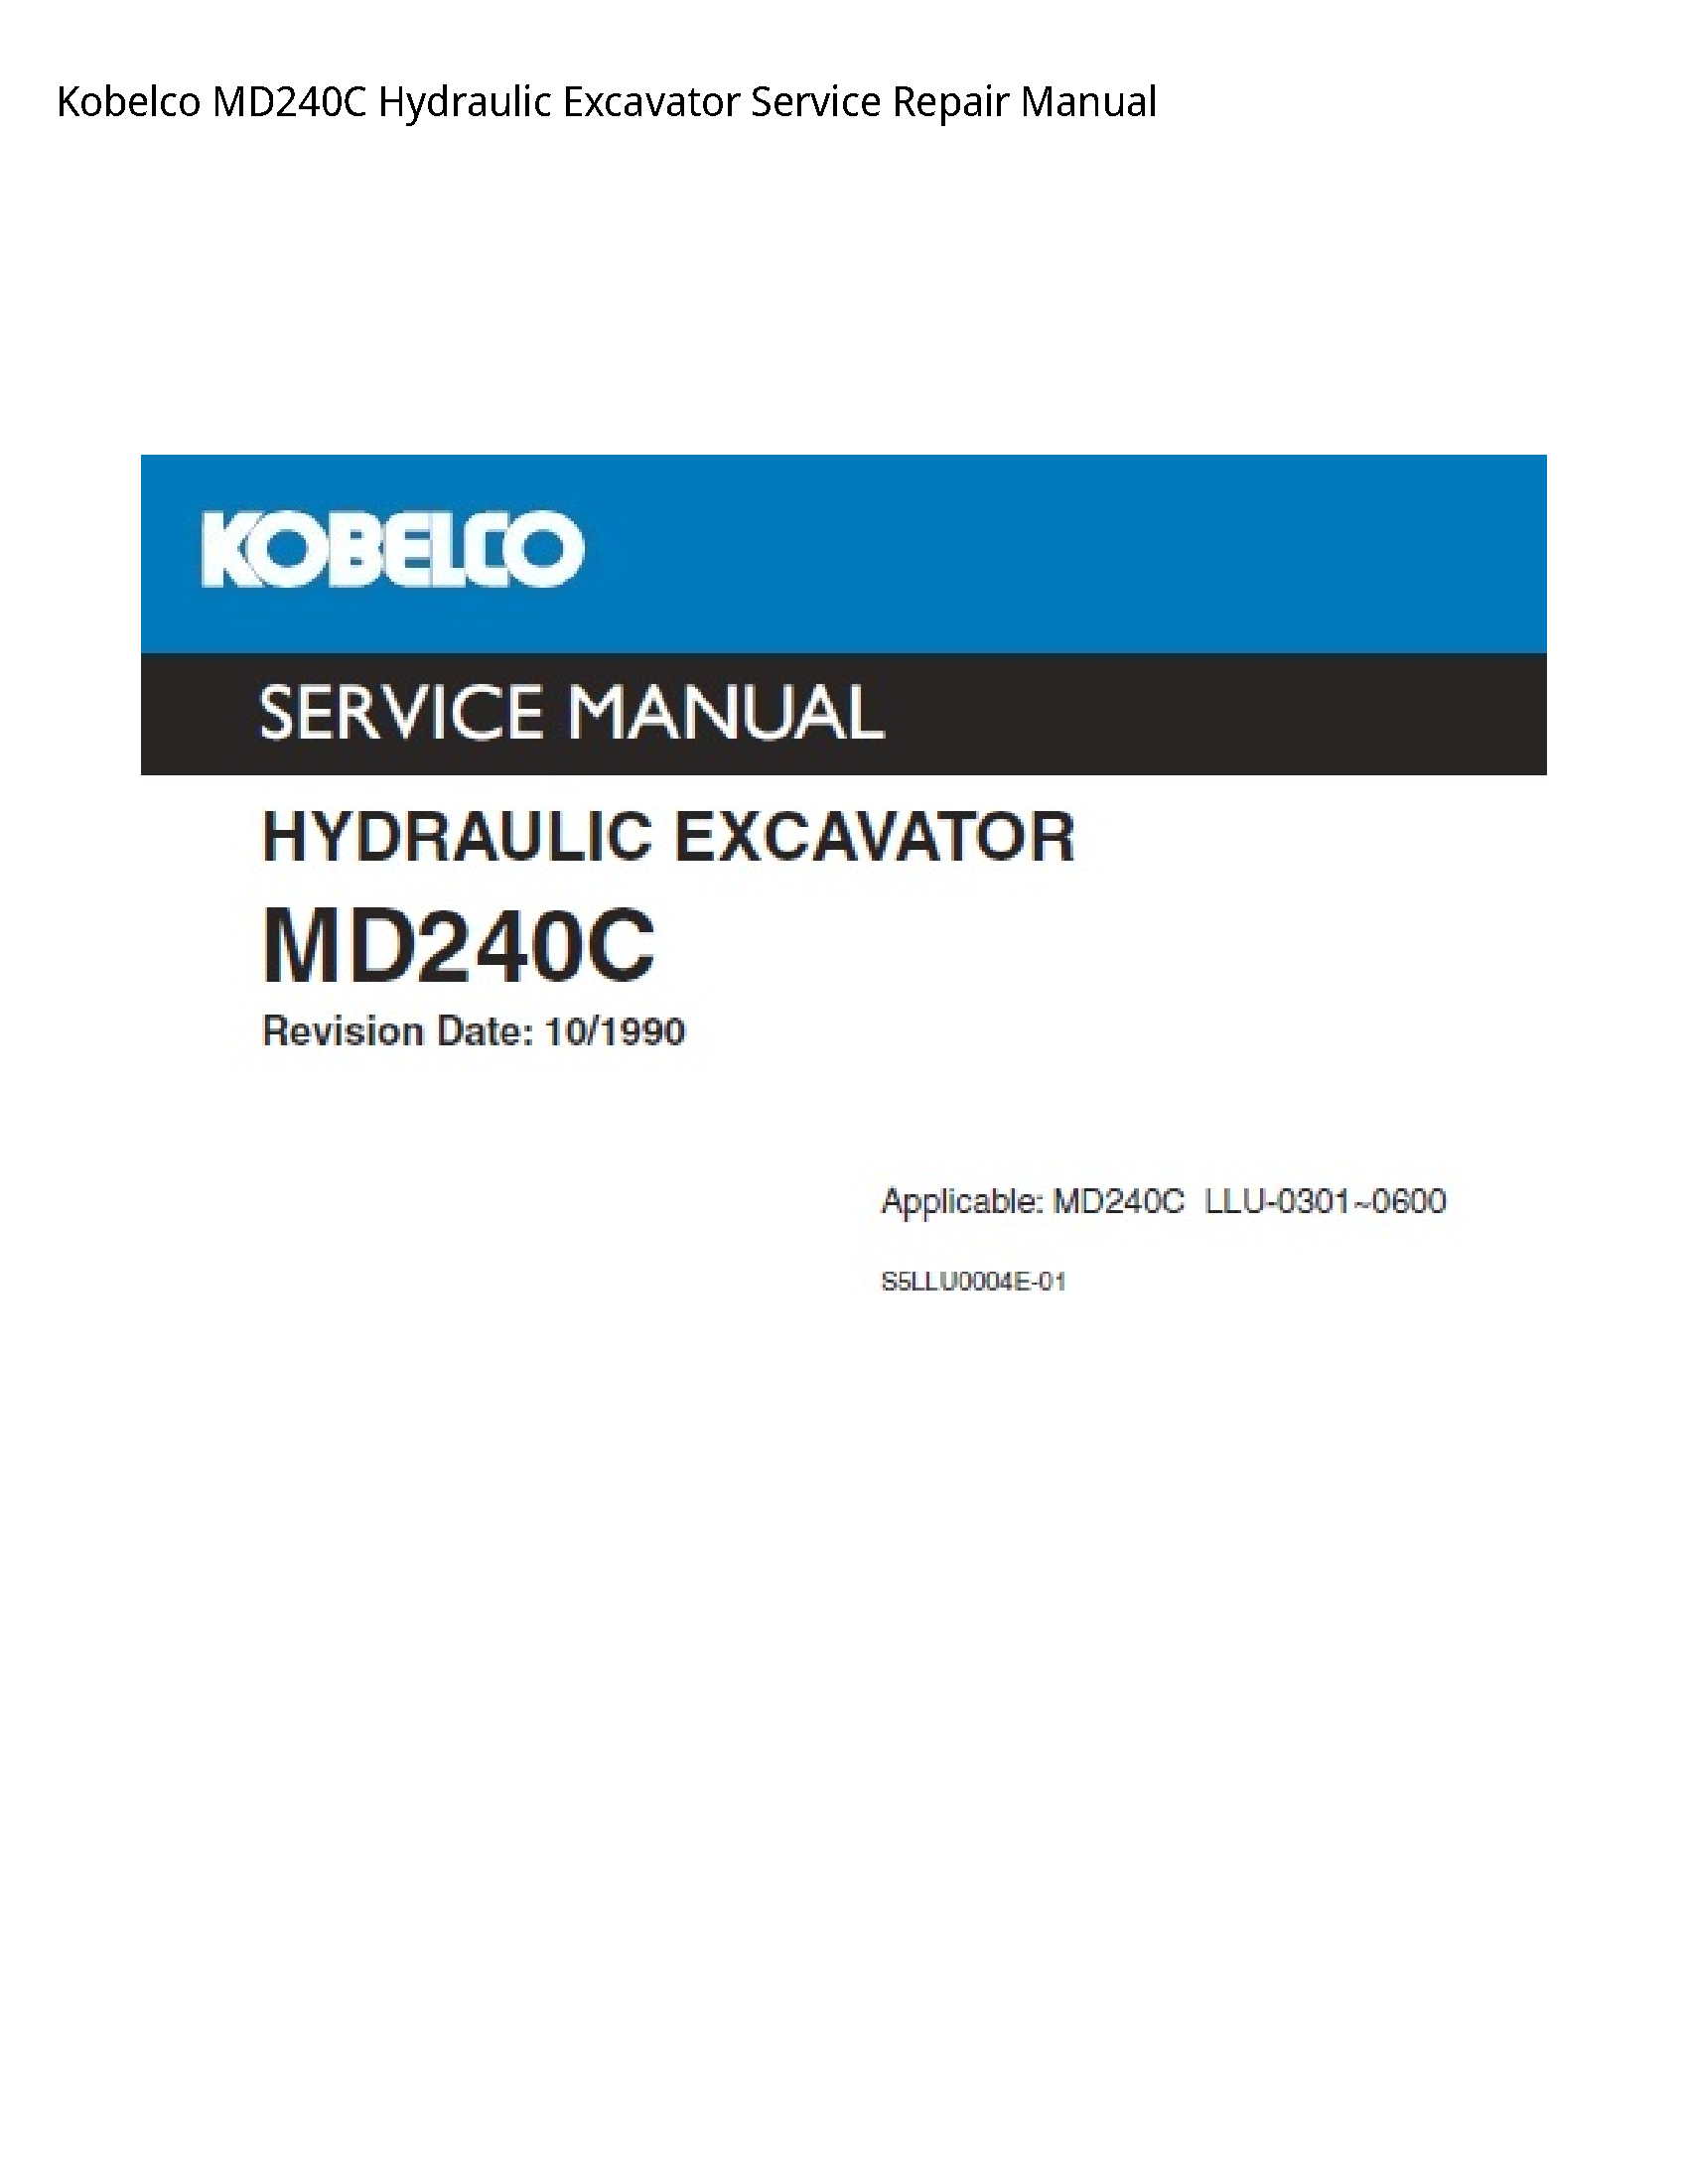 Kobelco MD240C Hydraulic Excavator manual